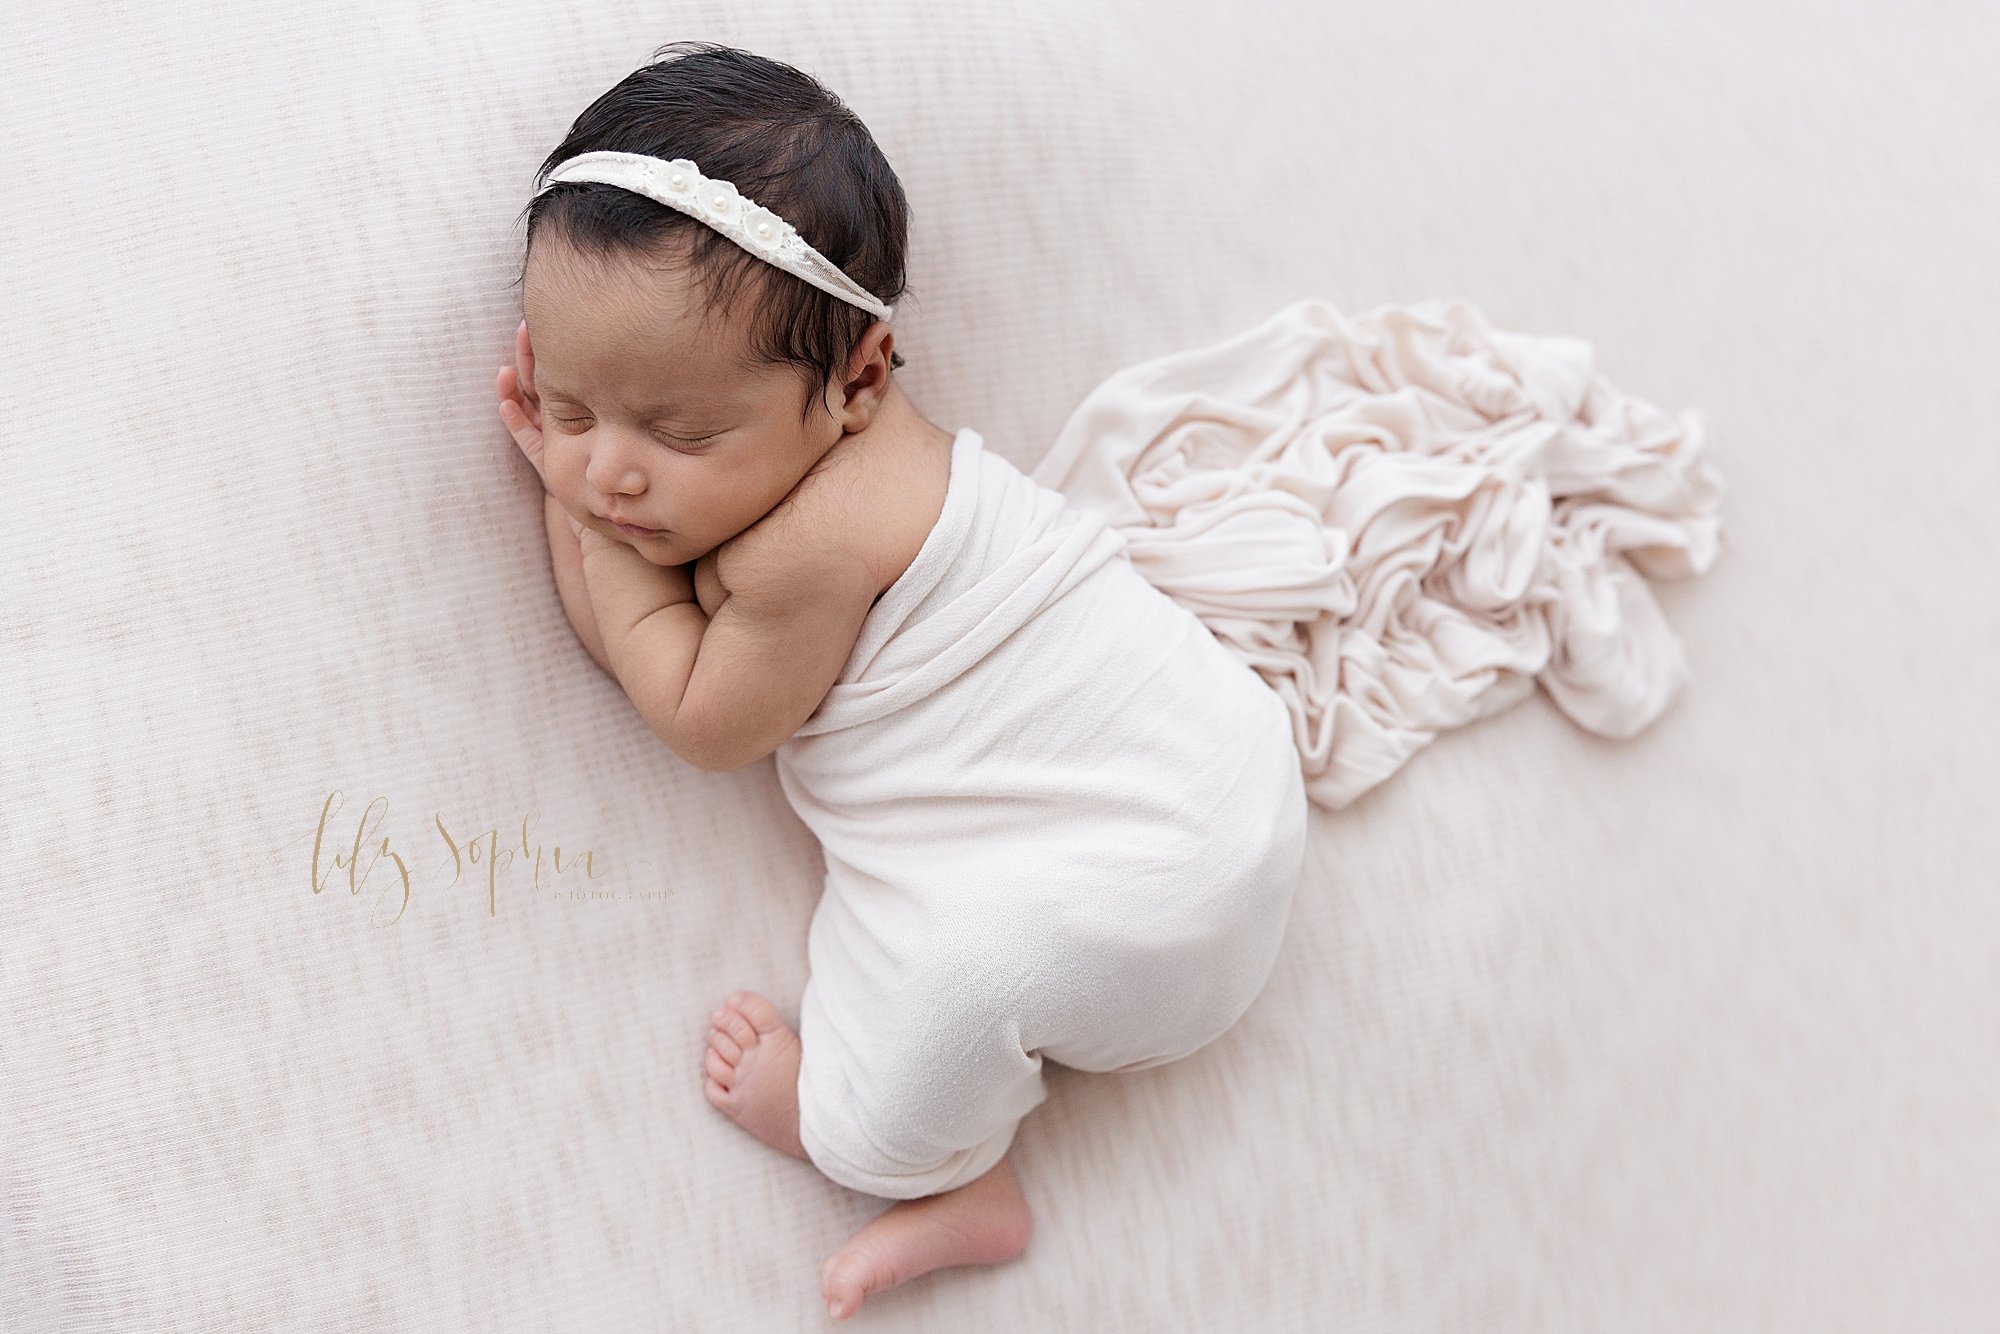 intown-atlanta-decatur-smyrna-buckhead-studio-family-infant-newborn-baby-girl-photoshoot_4911.jpg